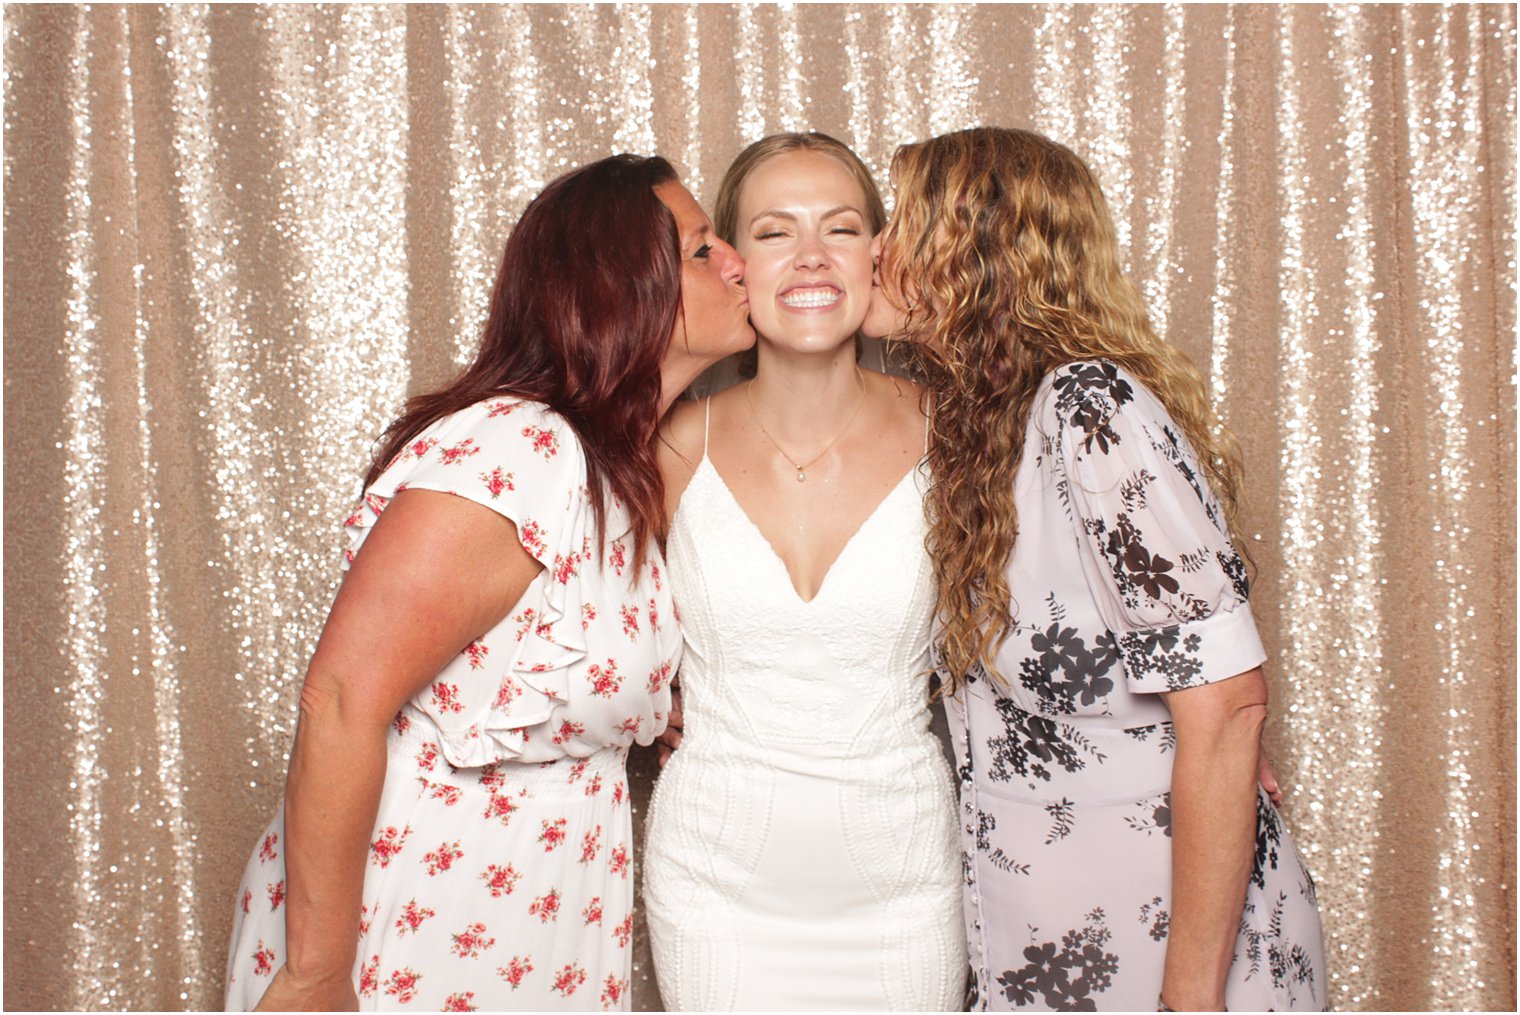 women kiss bride on the cheek during NJ wedding reception 